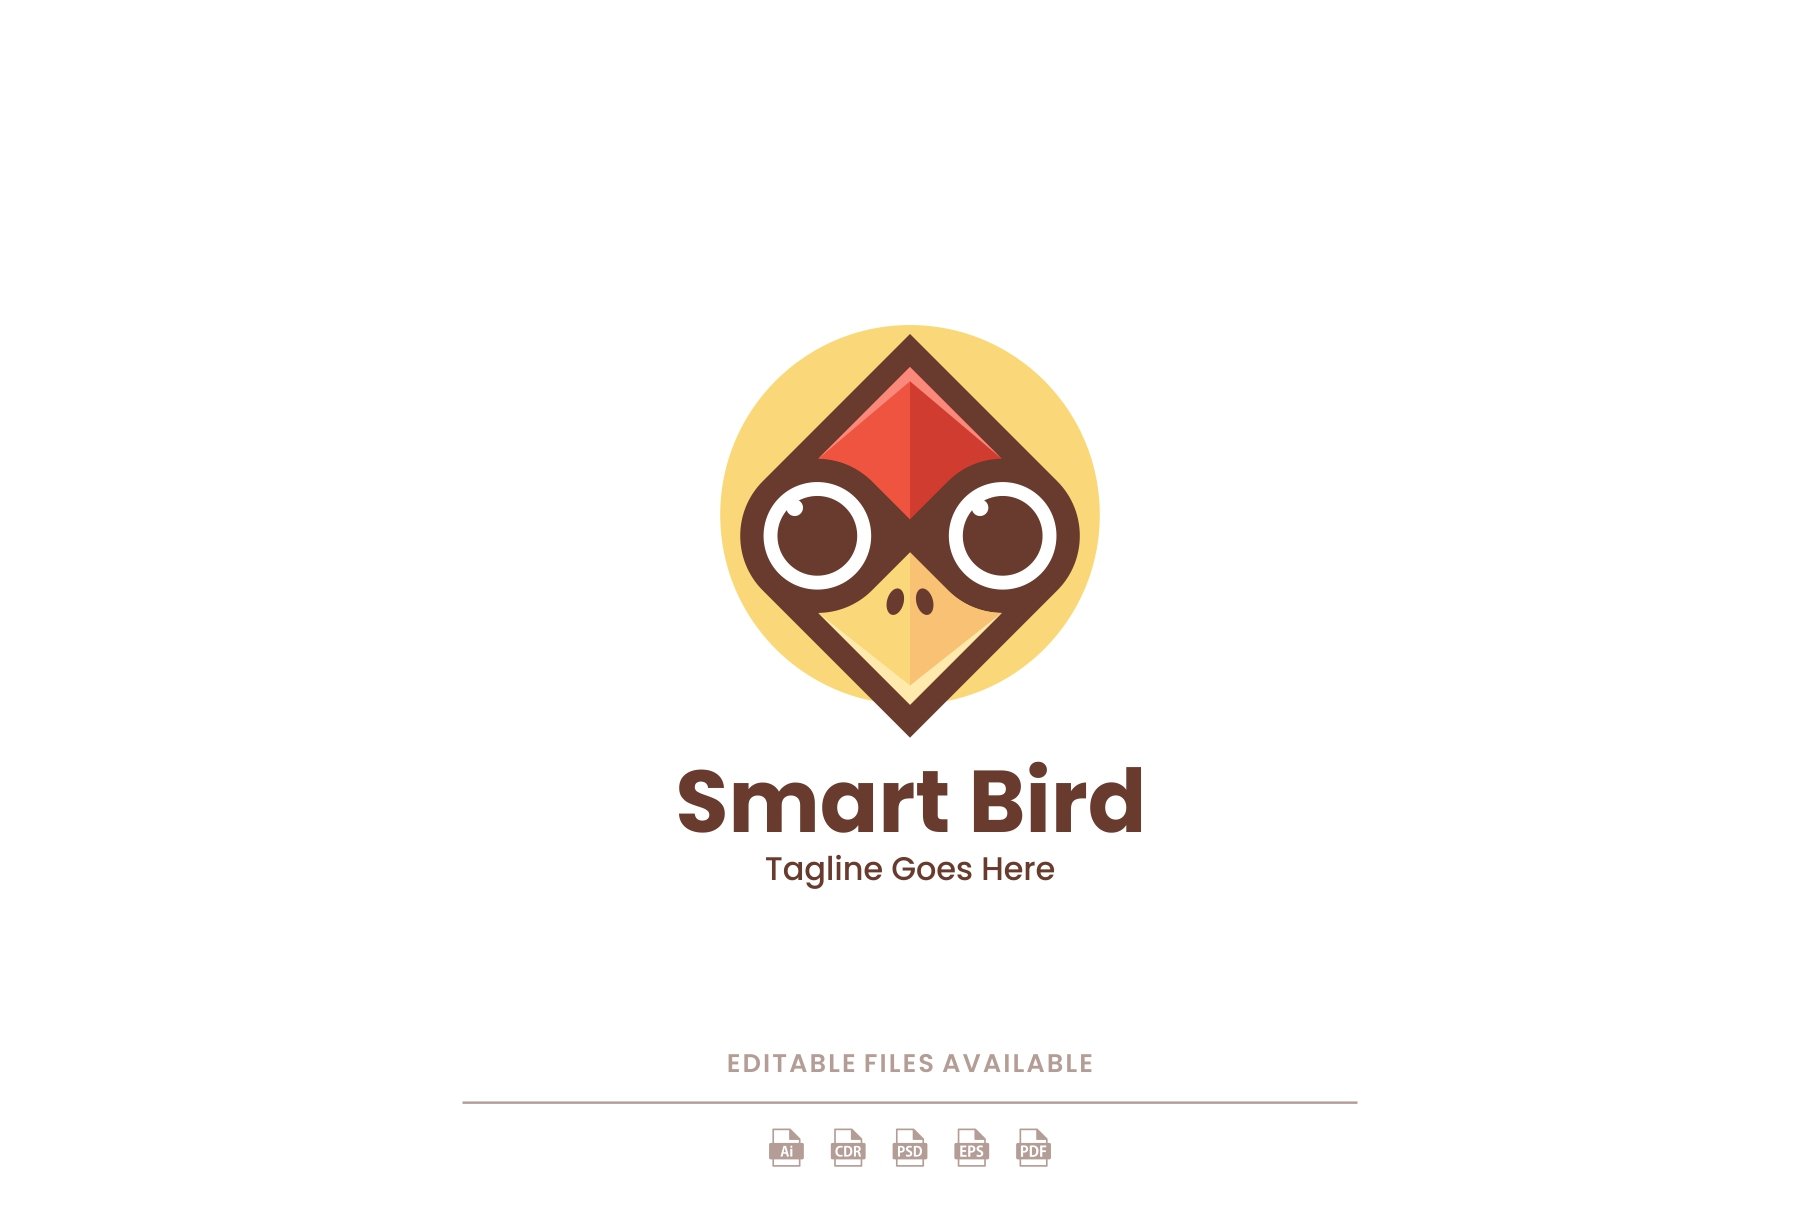 Woodpecker Bird Simple Logo cover image.